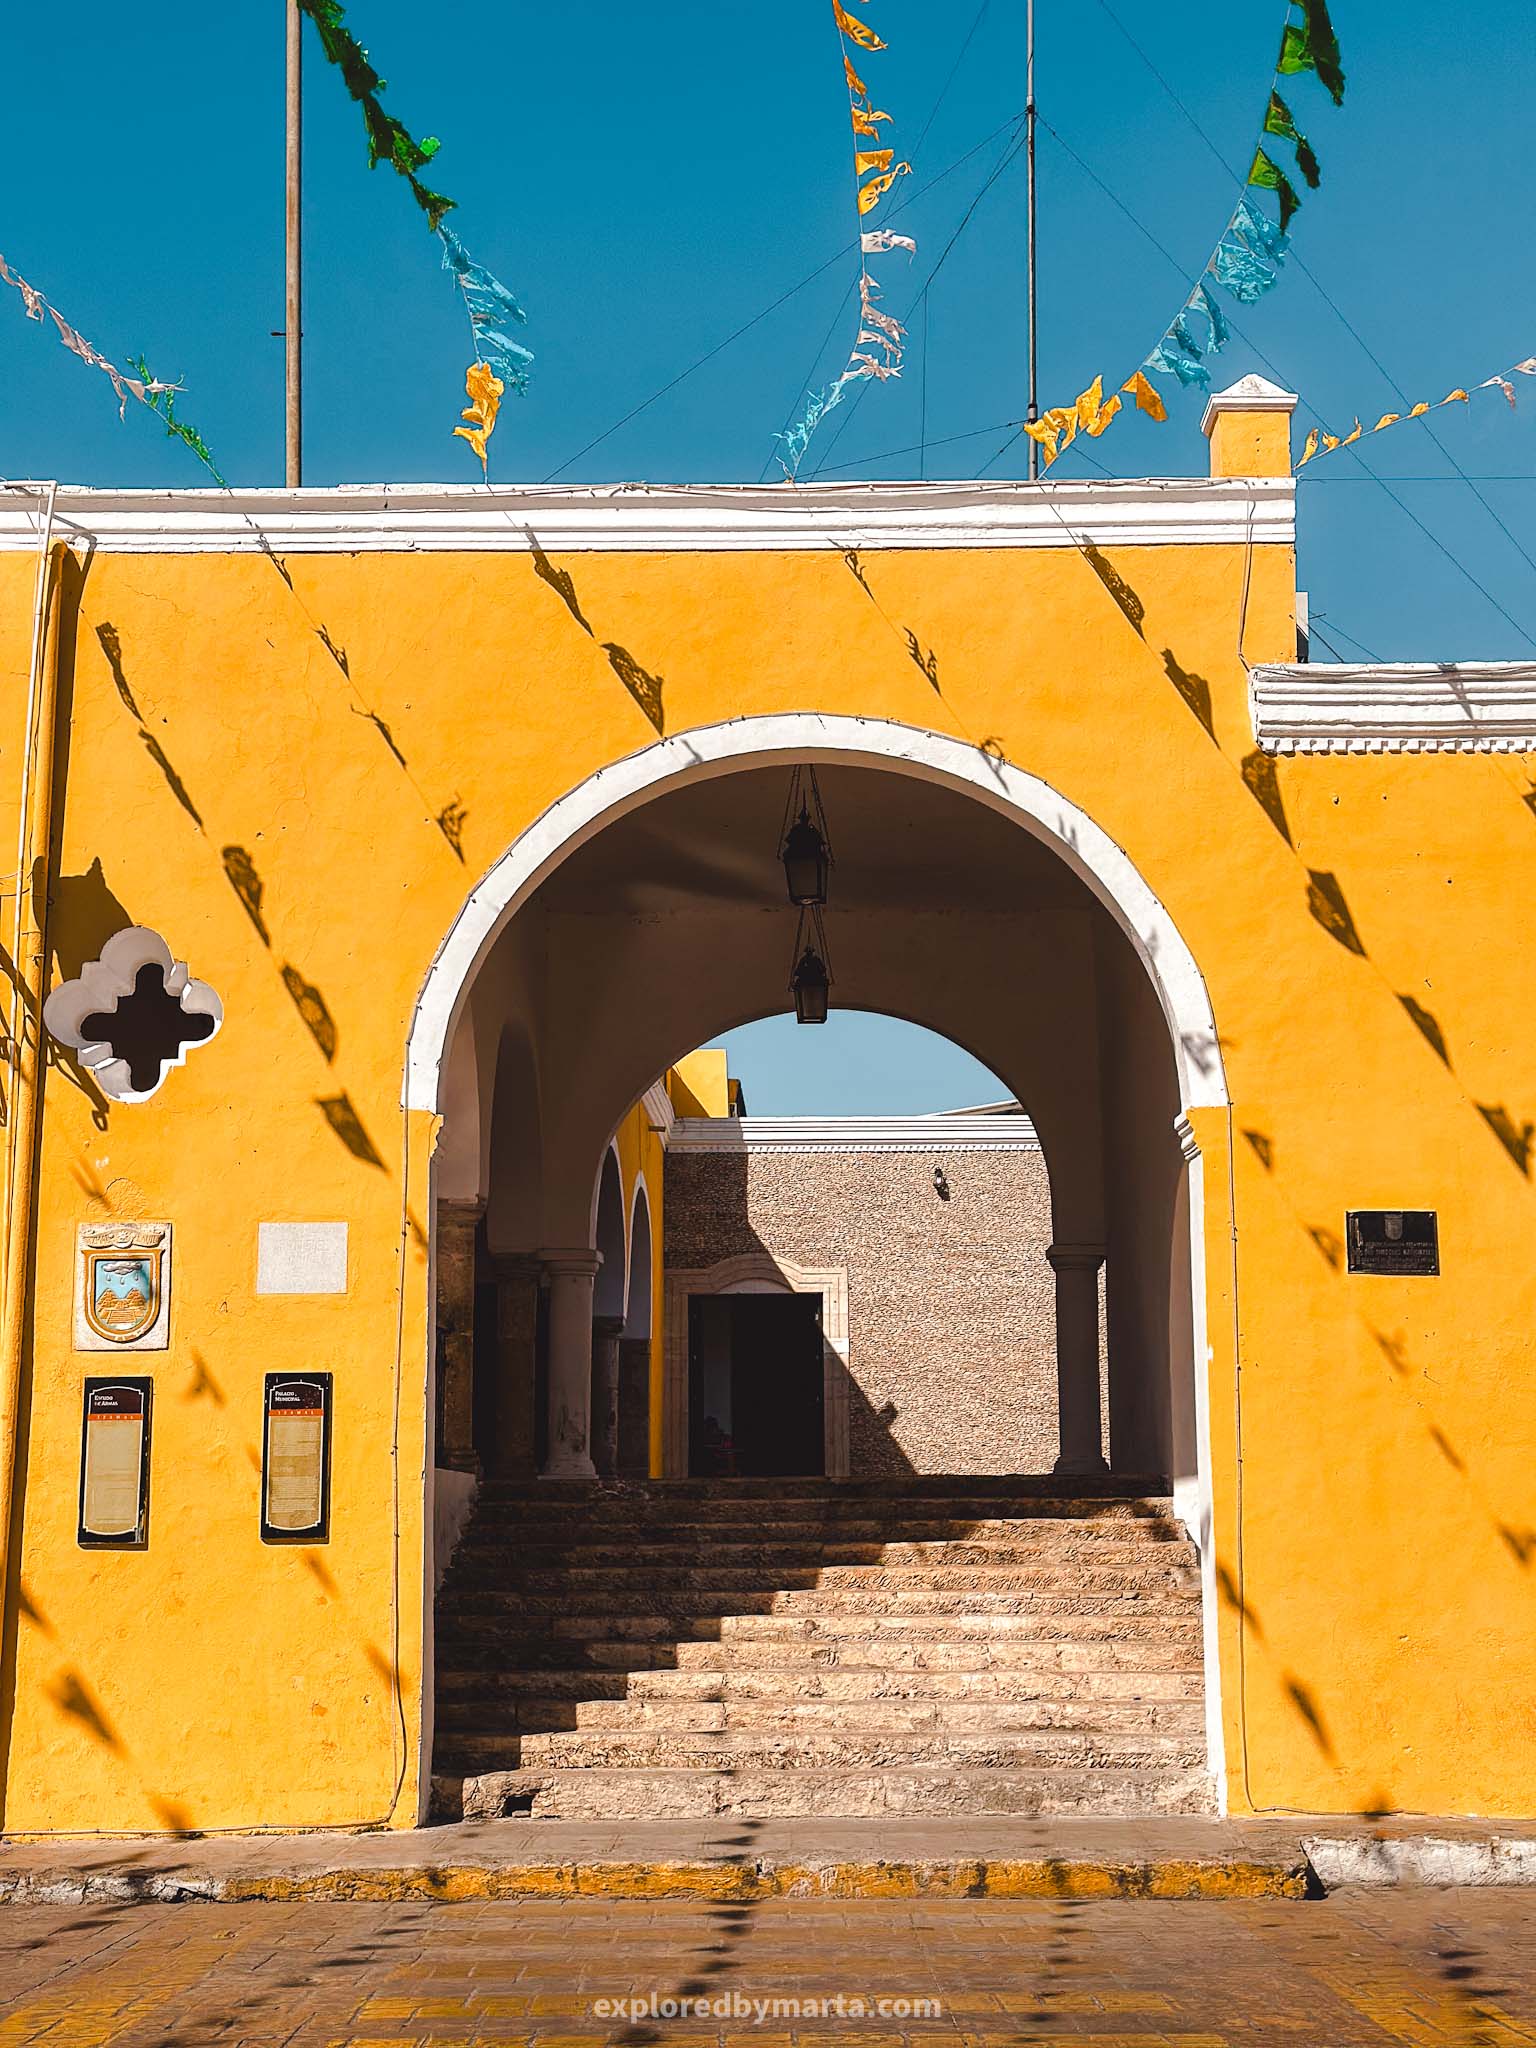 Izamal, Mexico-the yellow Palacio Municipal Izamal or the Town Hall of Izamal is an impressive yellow building situated at 5 de Mayo Park and features a beautiful arcade